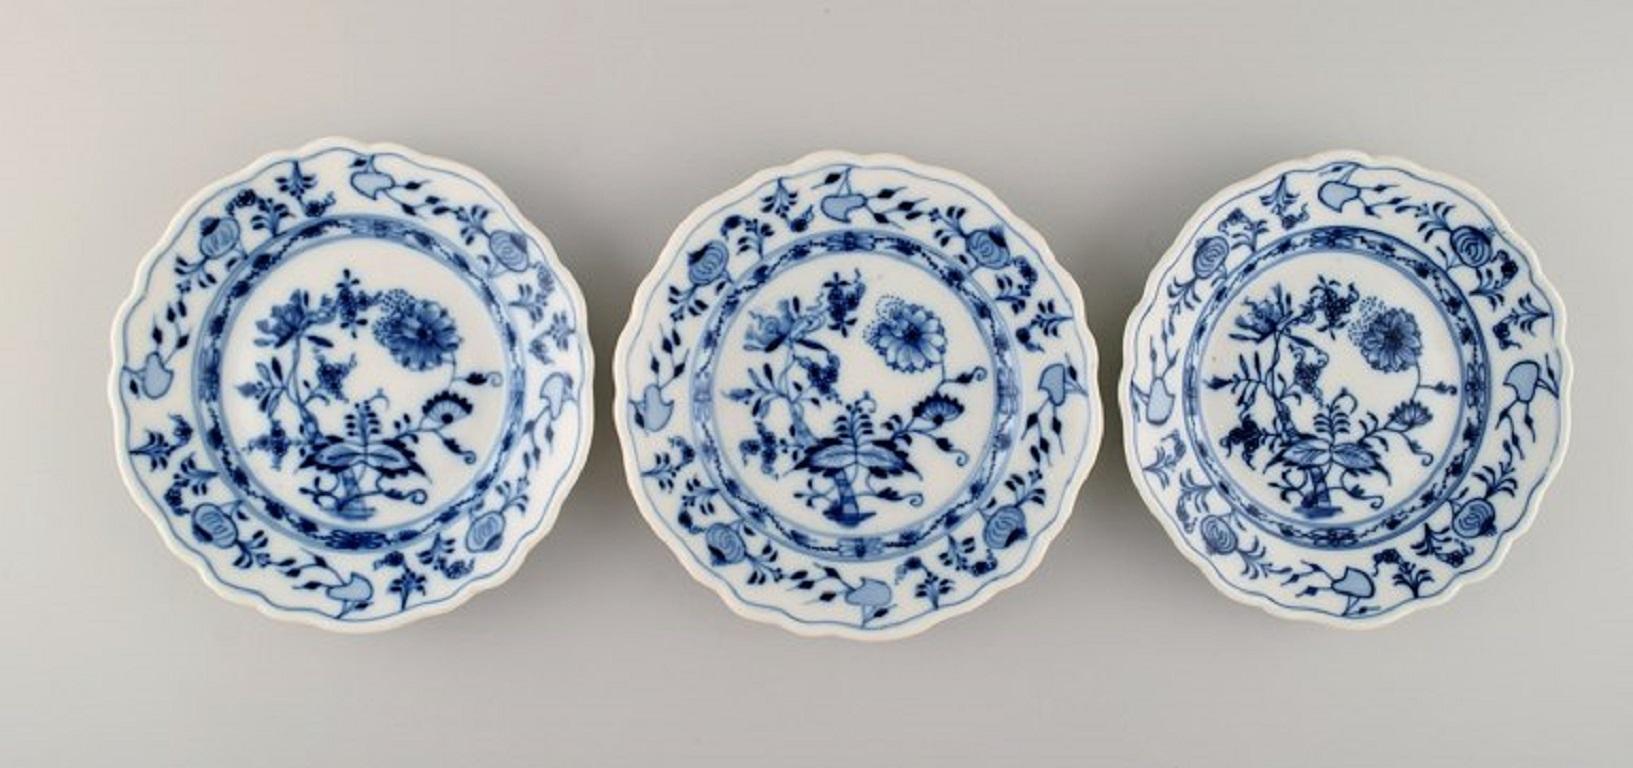 Stadt Meissen Blue Onion pattern. Trivet and three plates. Mid-20th century.
Plate diameter: 17.5 cm
Trivet diameter: 14.5 cm.
In excellent condition.
Stamped.